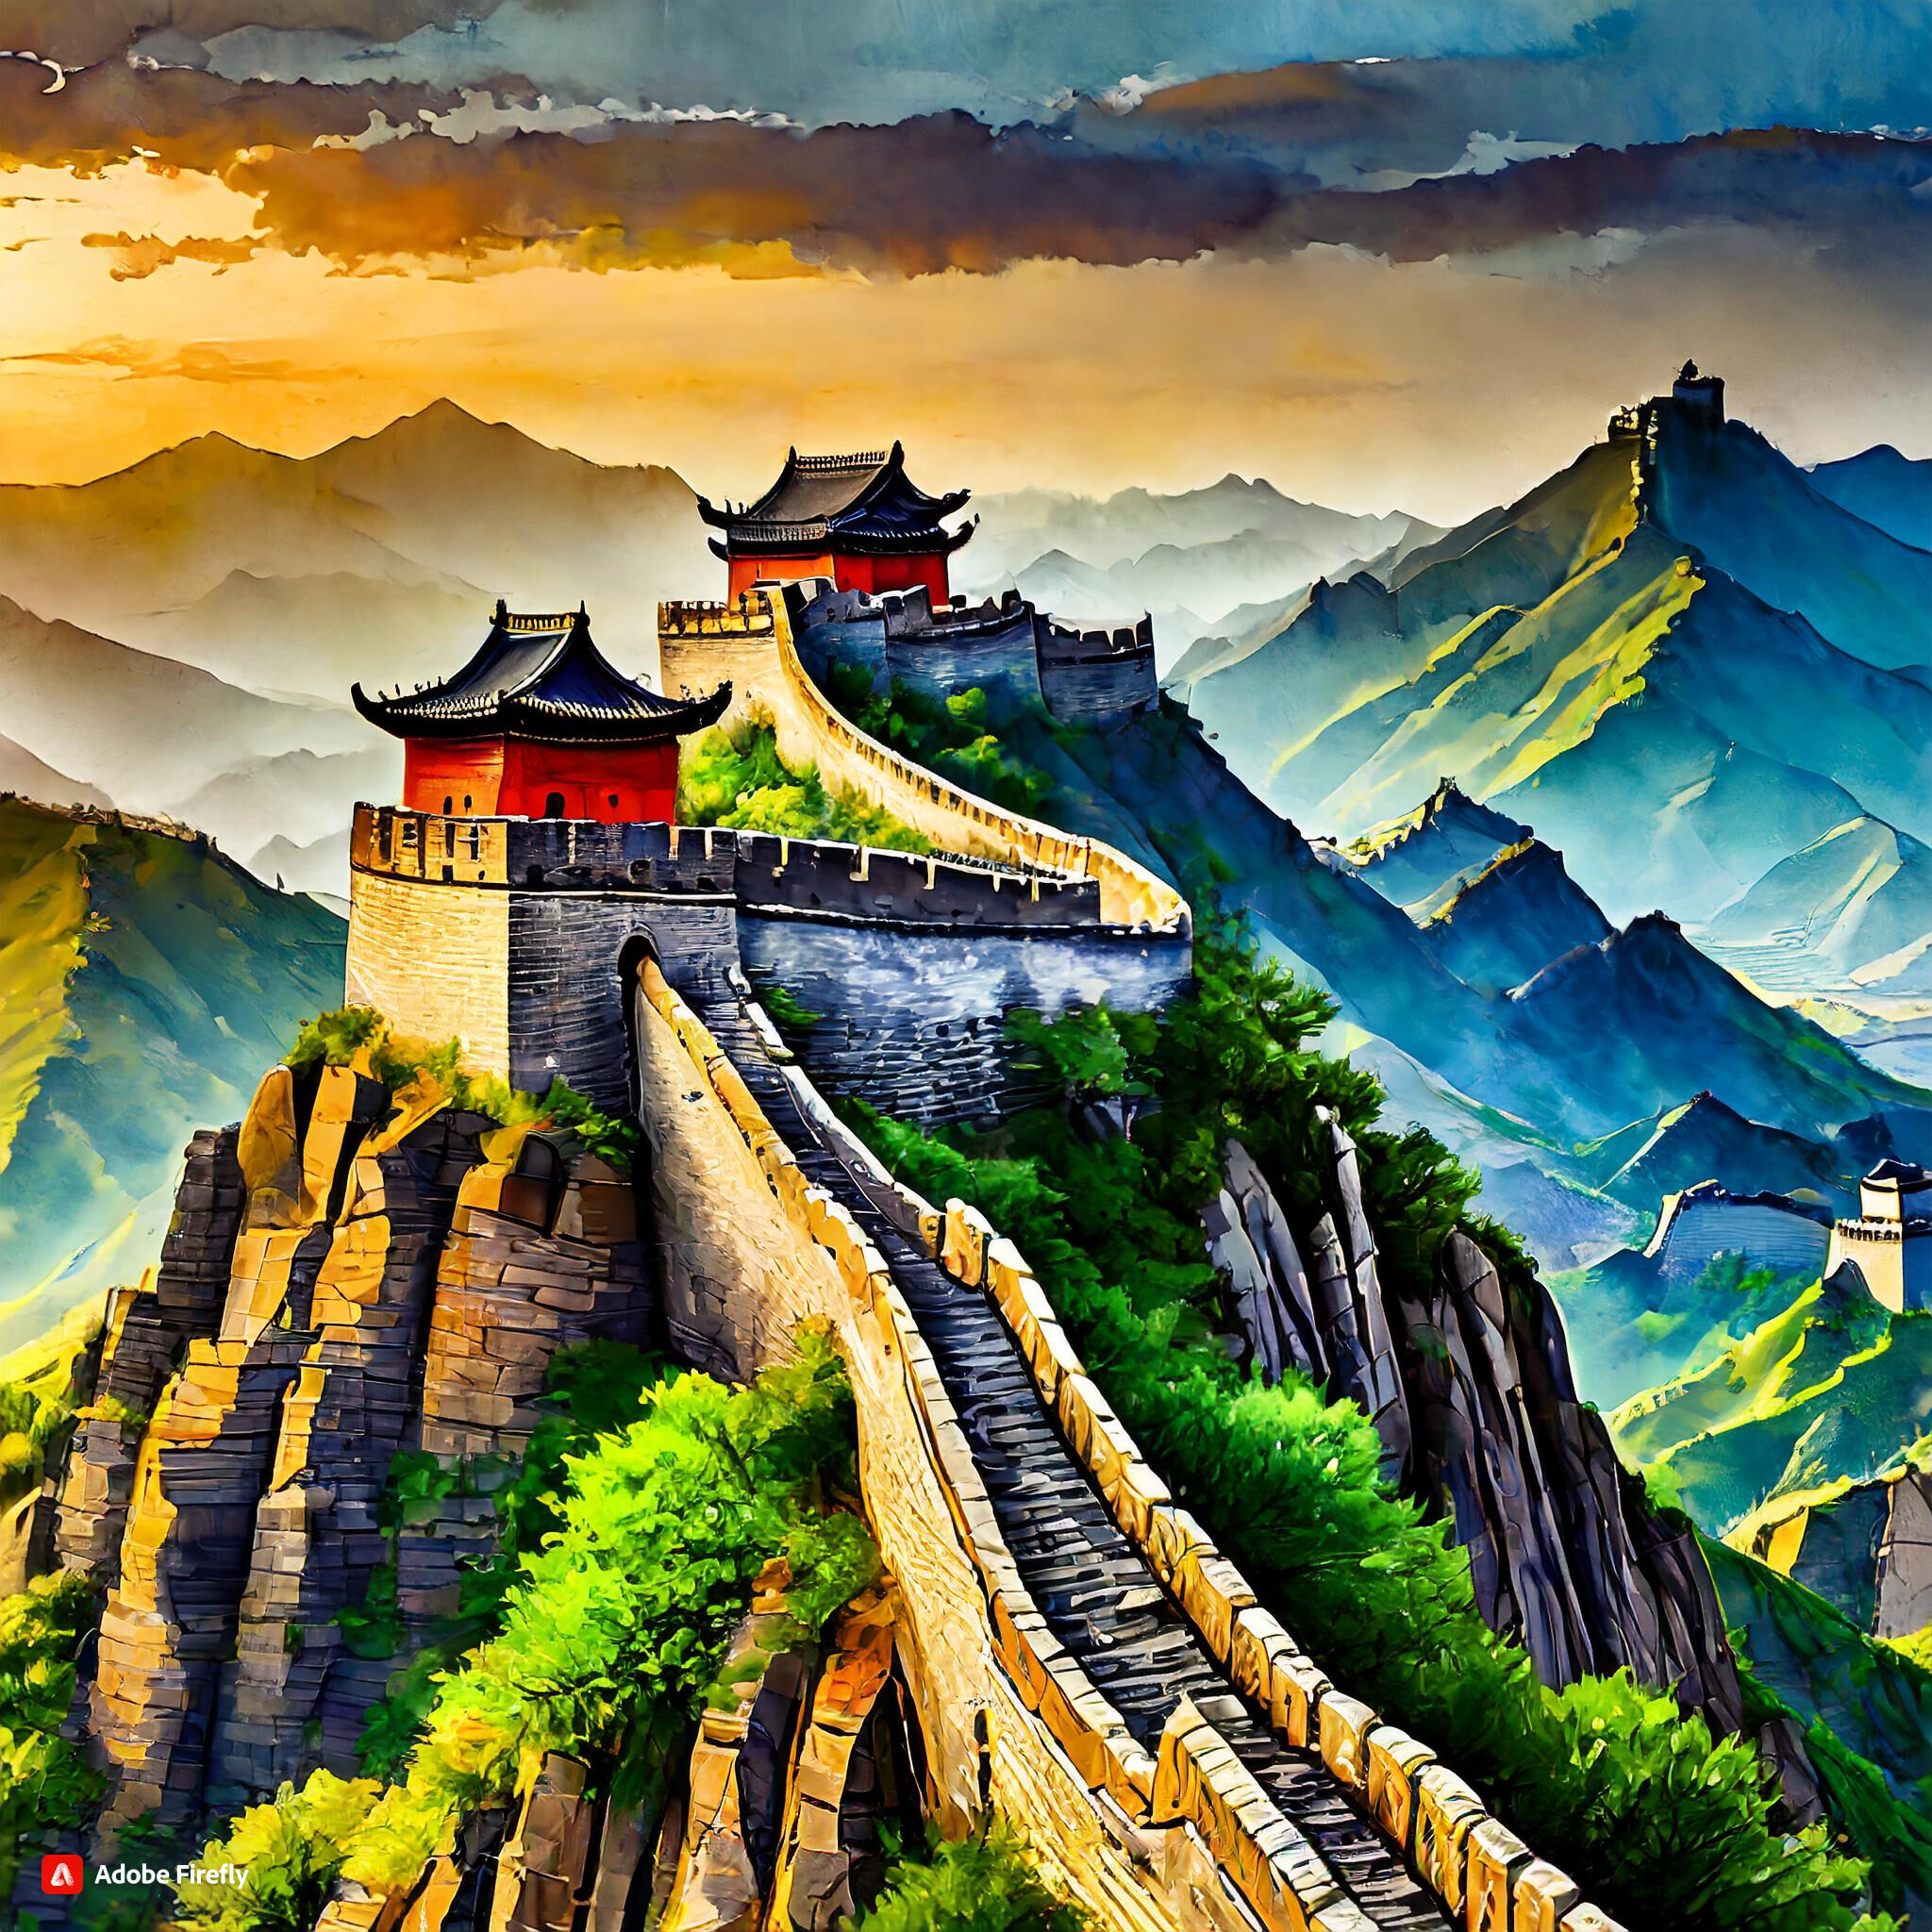 Firefly Scenic Great Wall of China.jpg